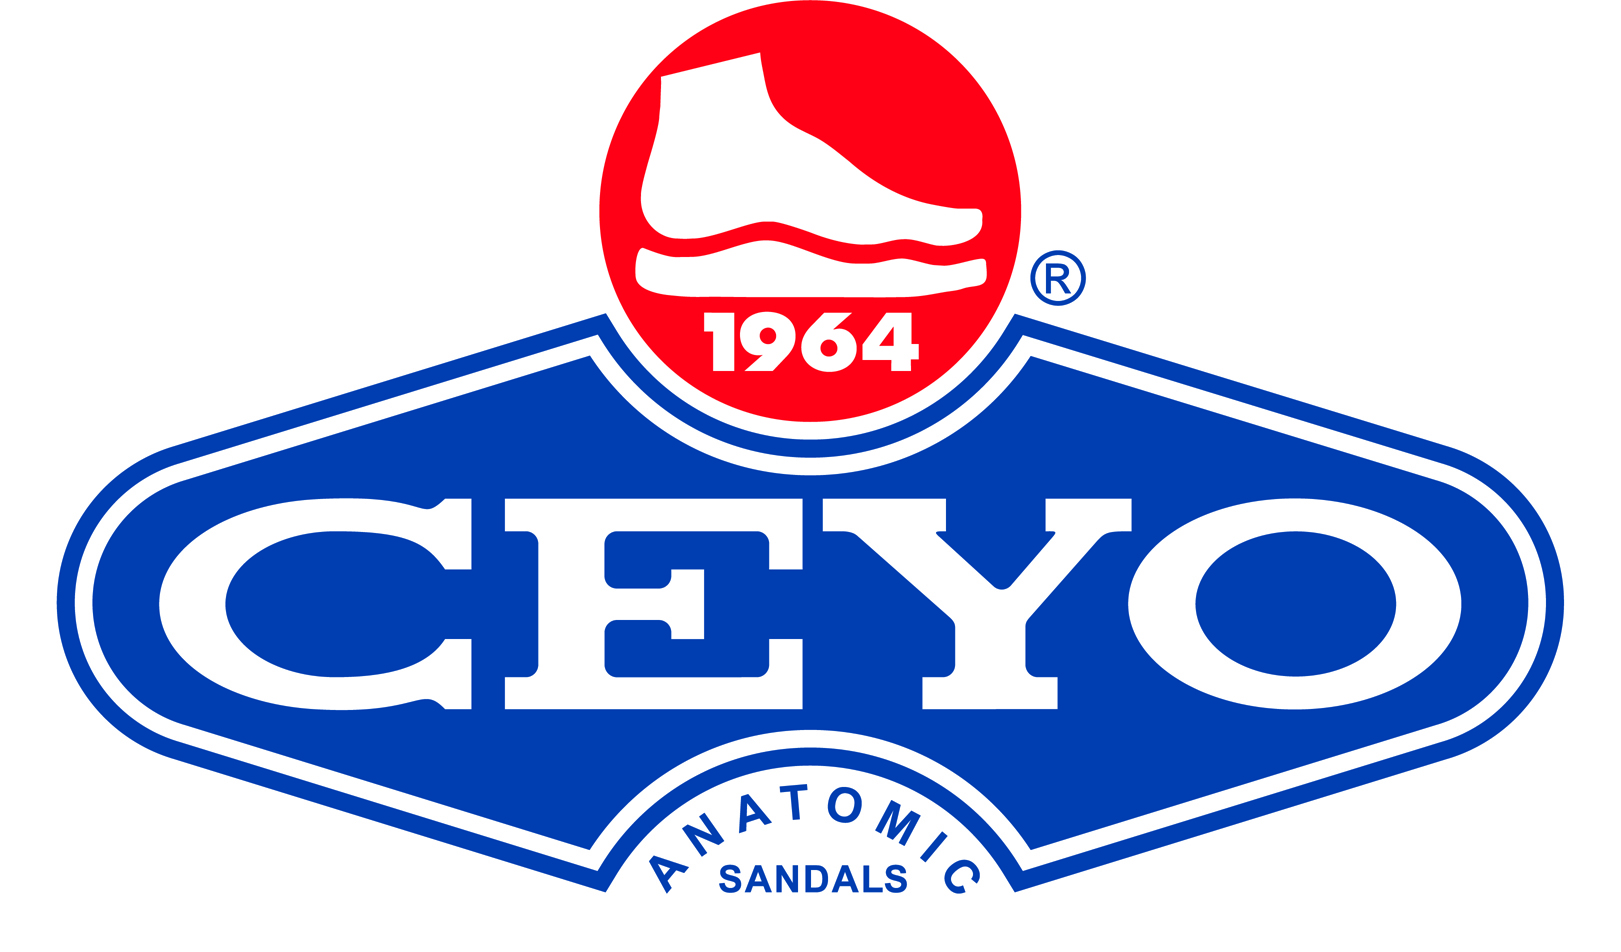 CEYO SANDALS Logo